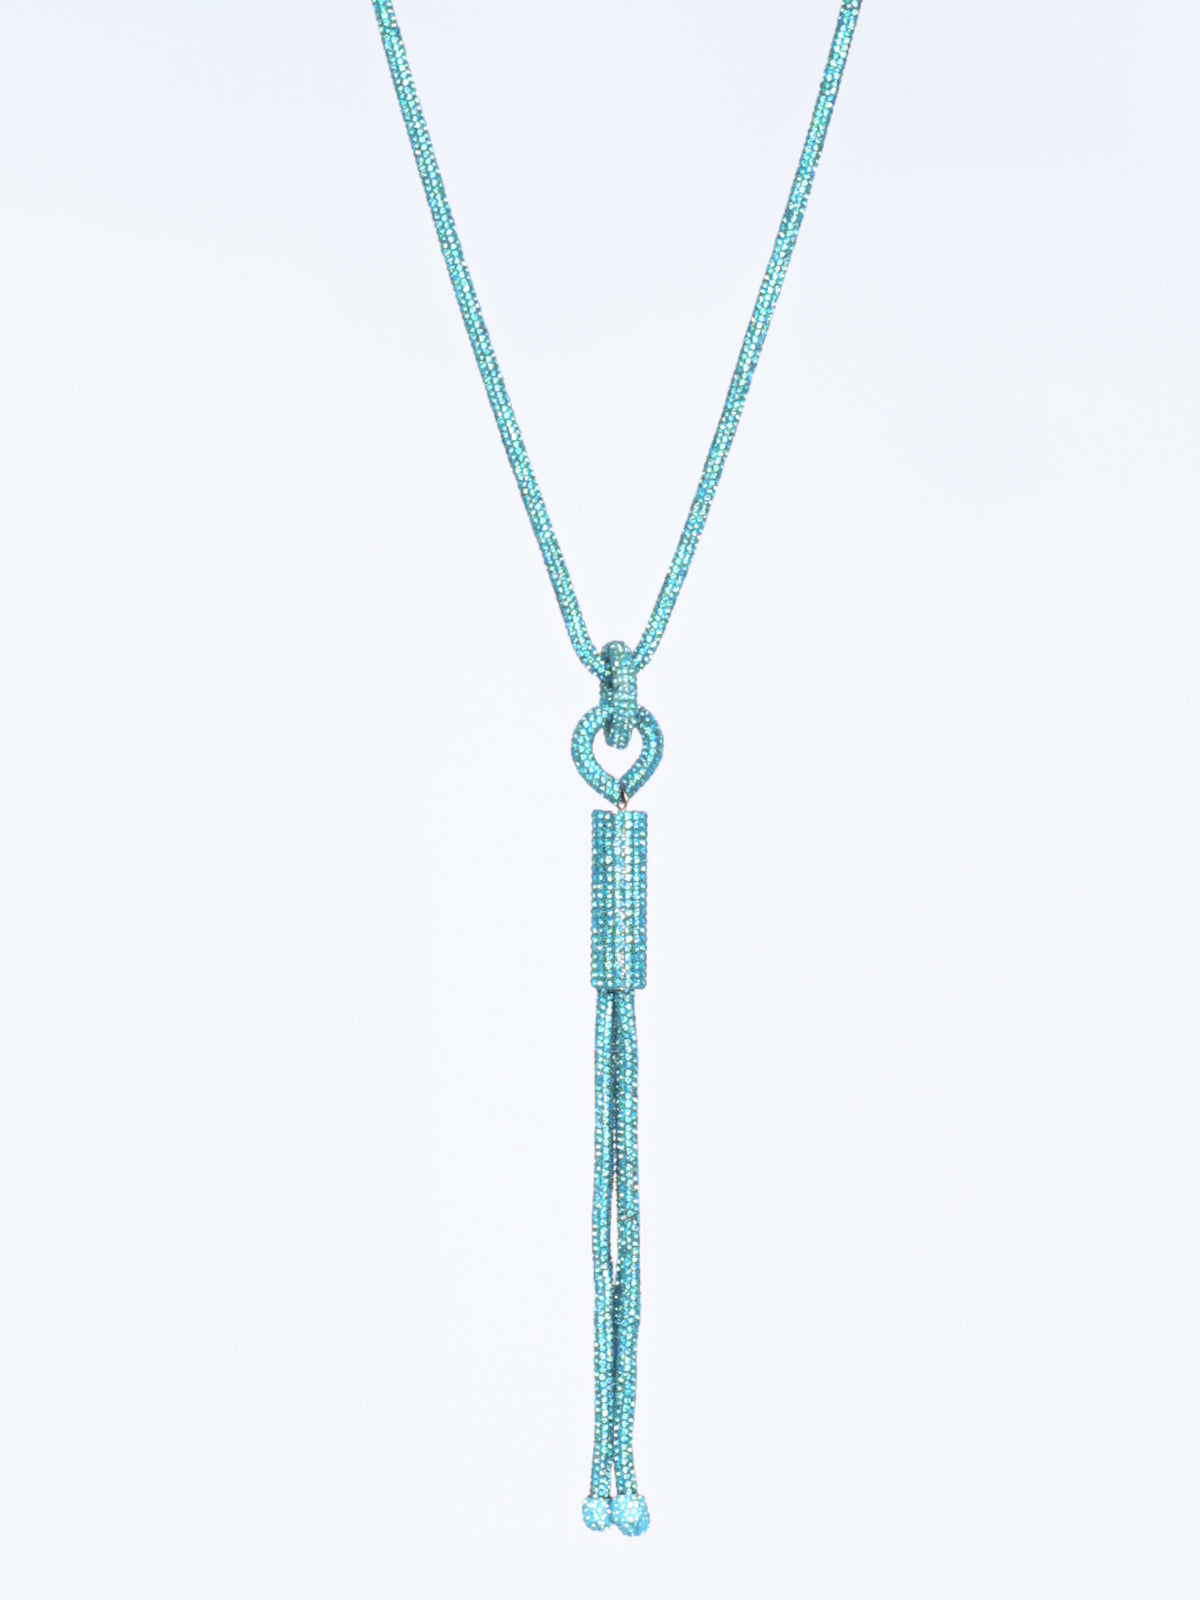 Bling necklace with fringe pendant turquoise